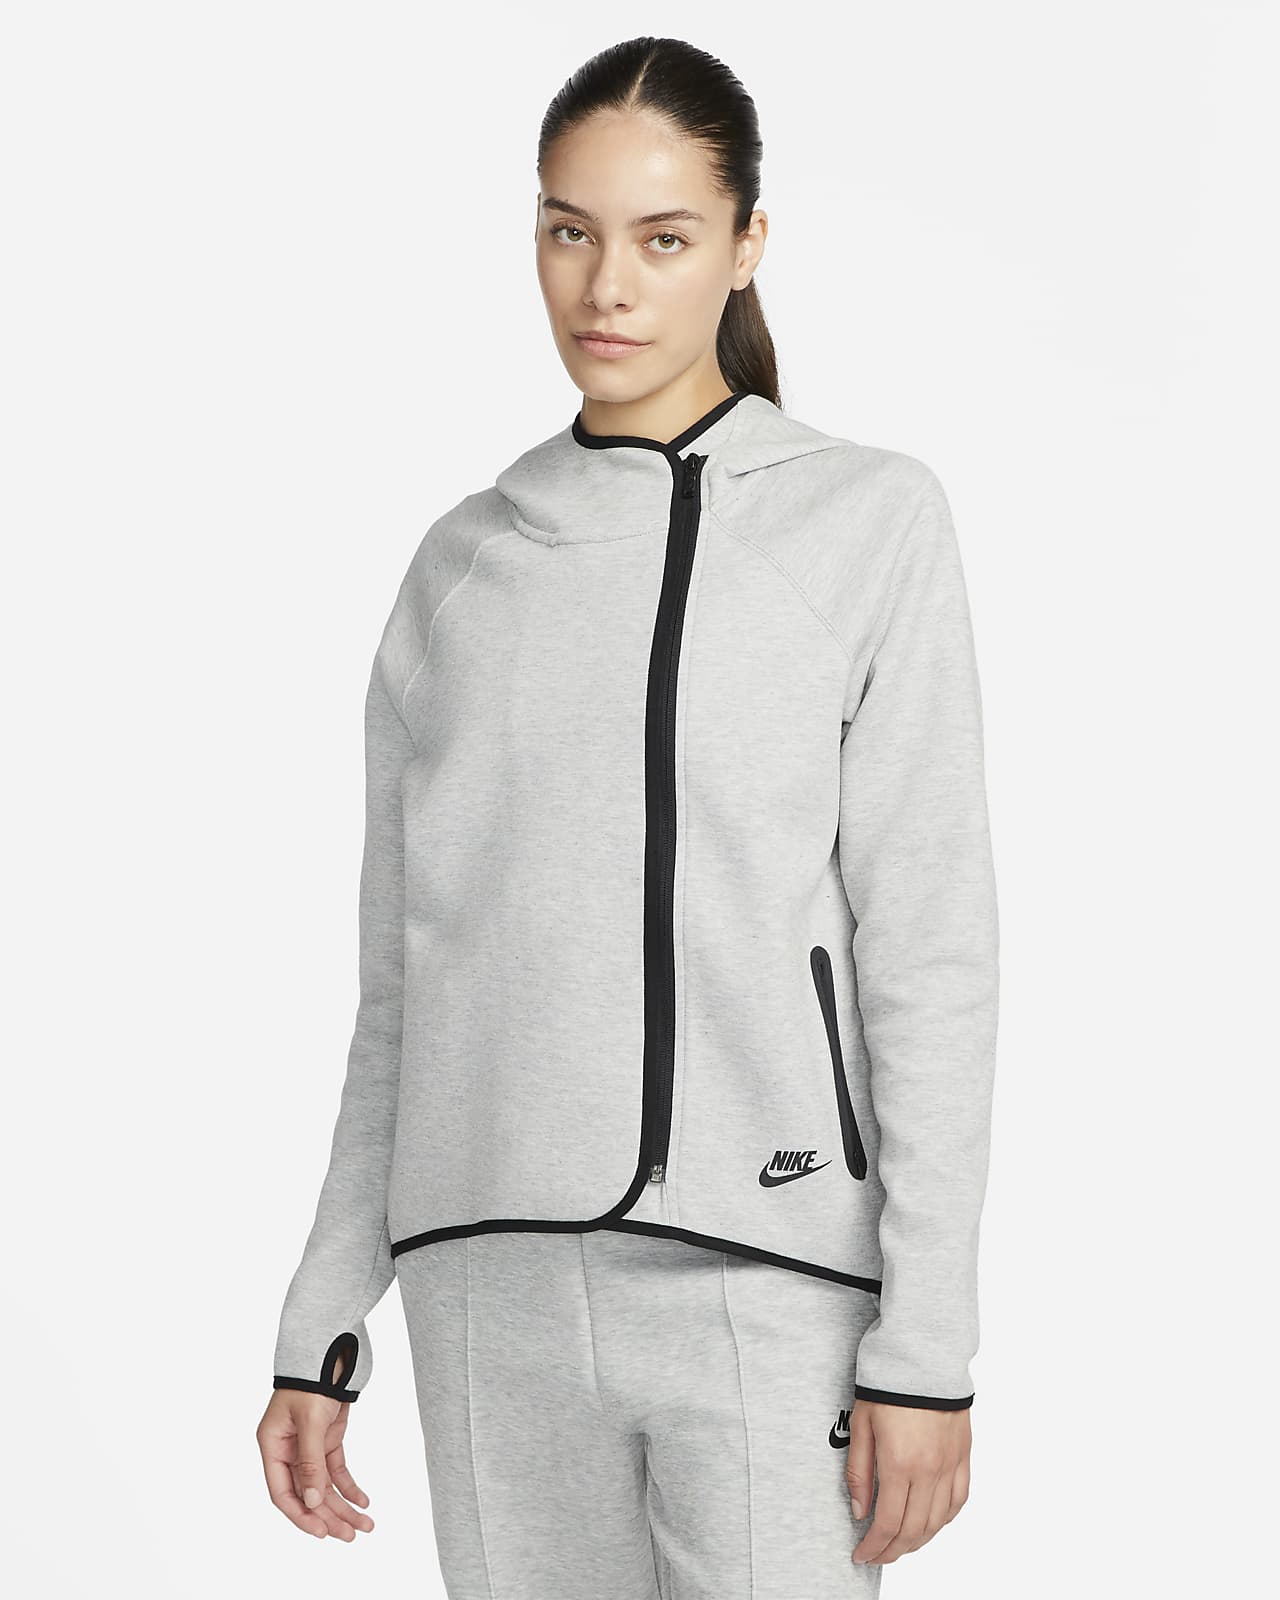 Løst Nike Tech Fleece OG-slag til kvinder.